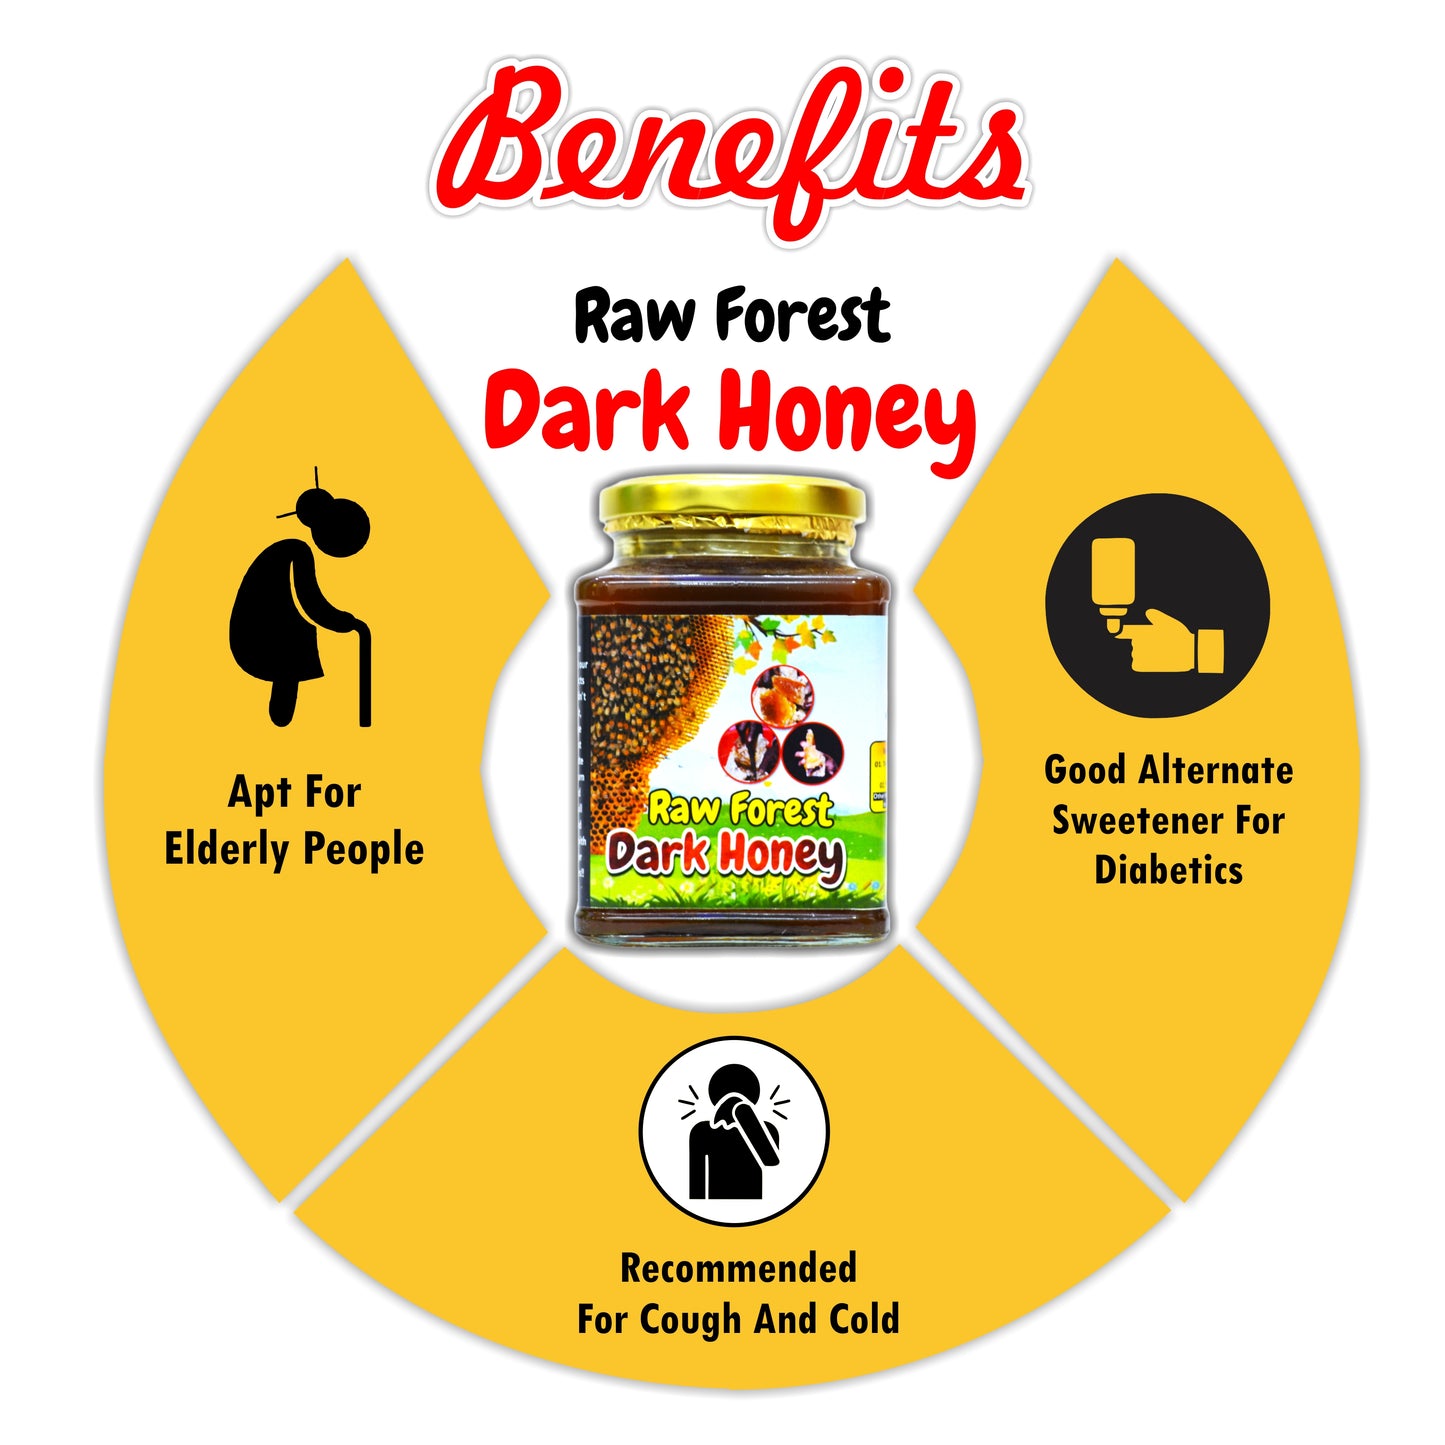 Dark Coloured Raw Forest Honey - Thalamalai Origin